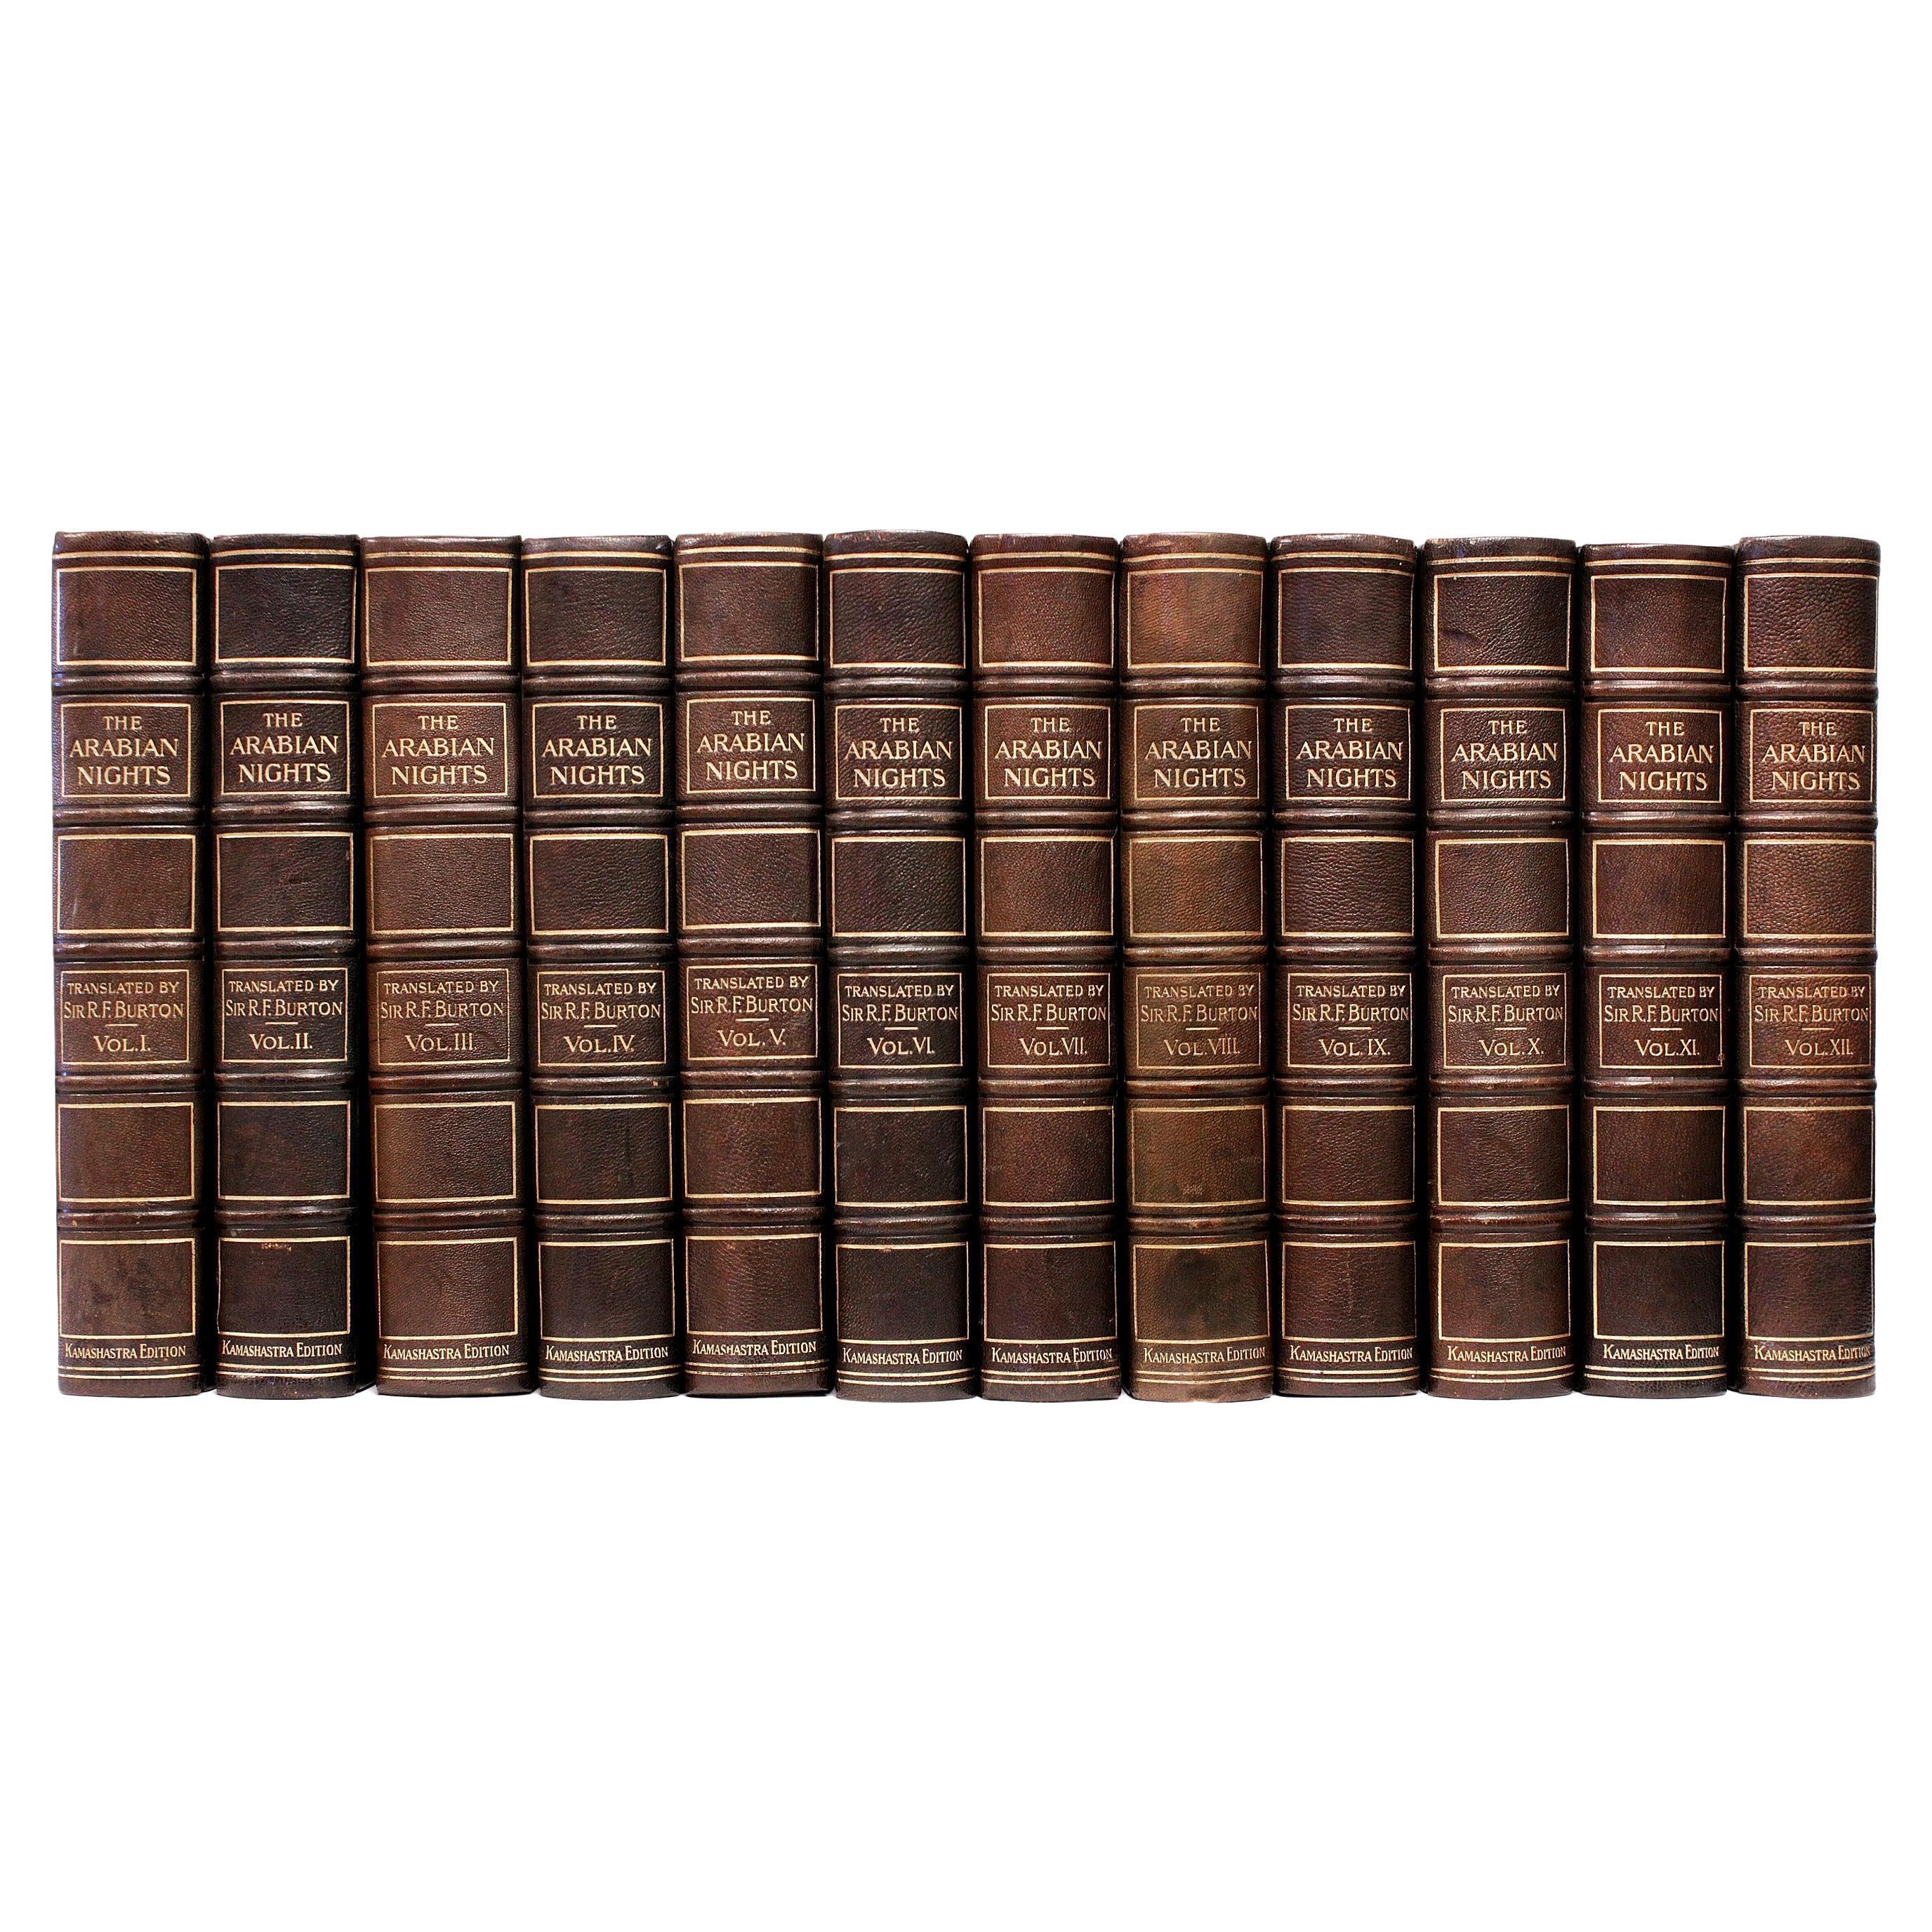 A. Richard Burton. The Book Of The Thousand Nights, 12 volumes, 1897, EN FINE BINDING